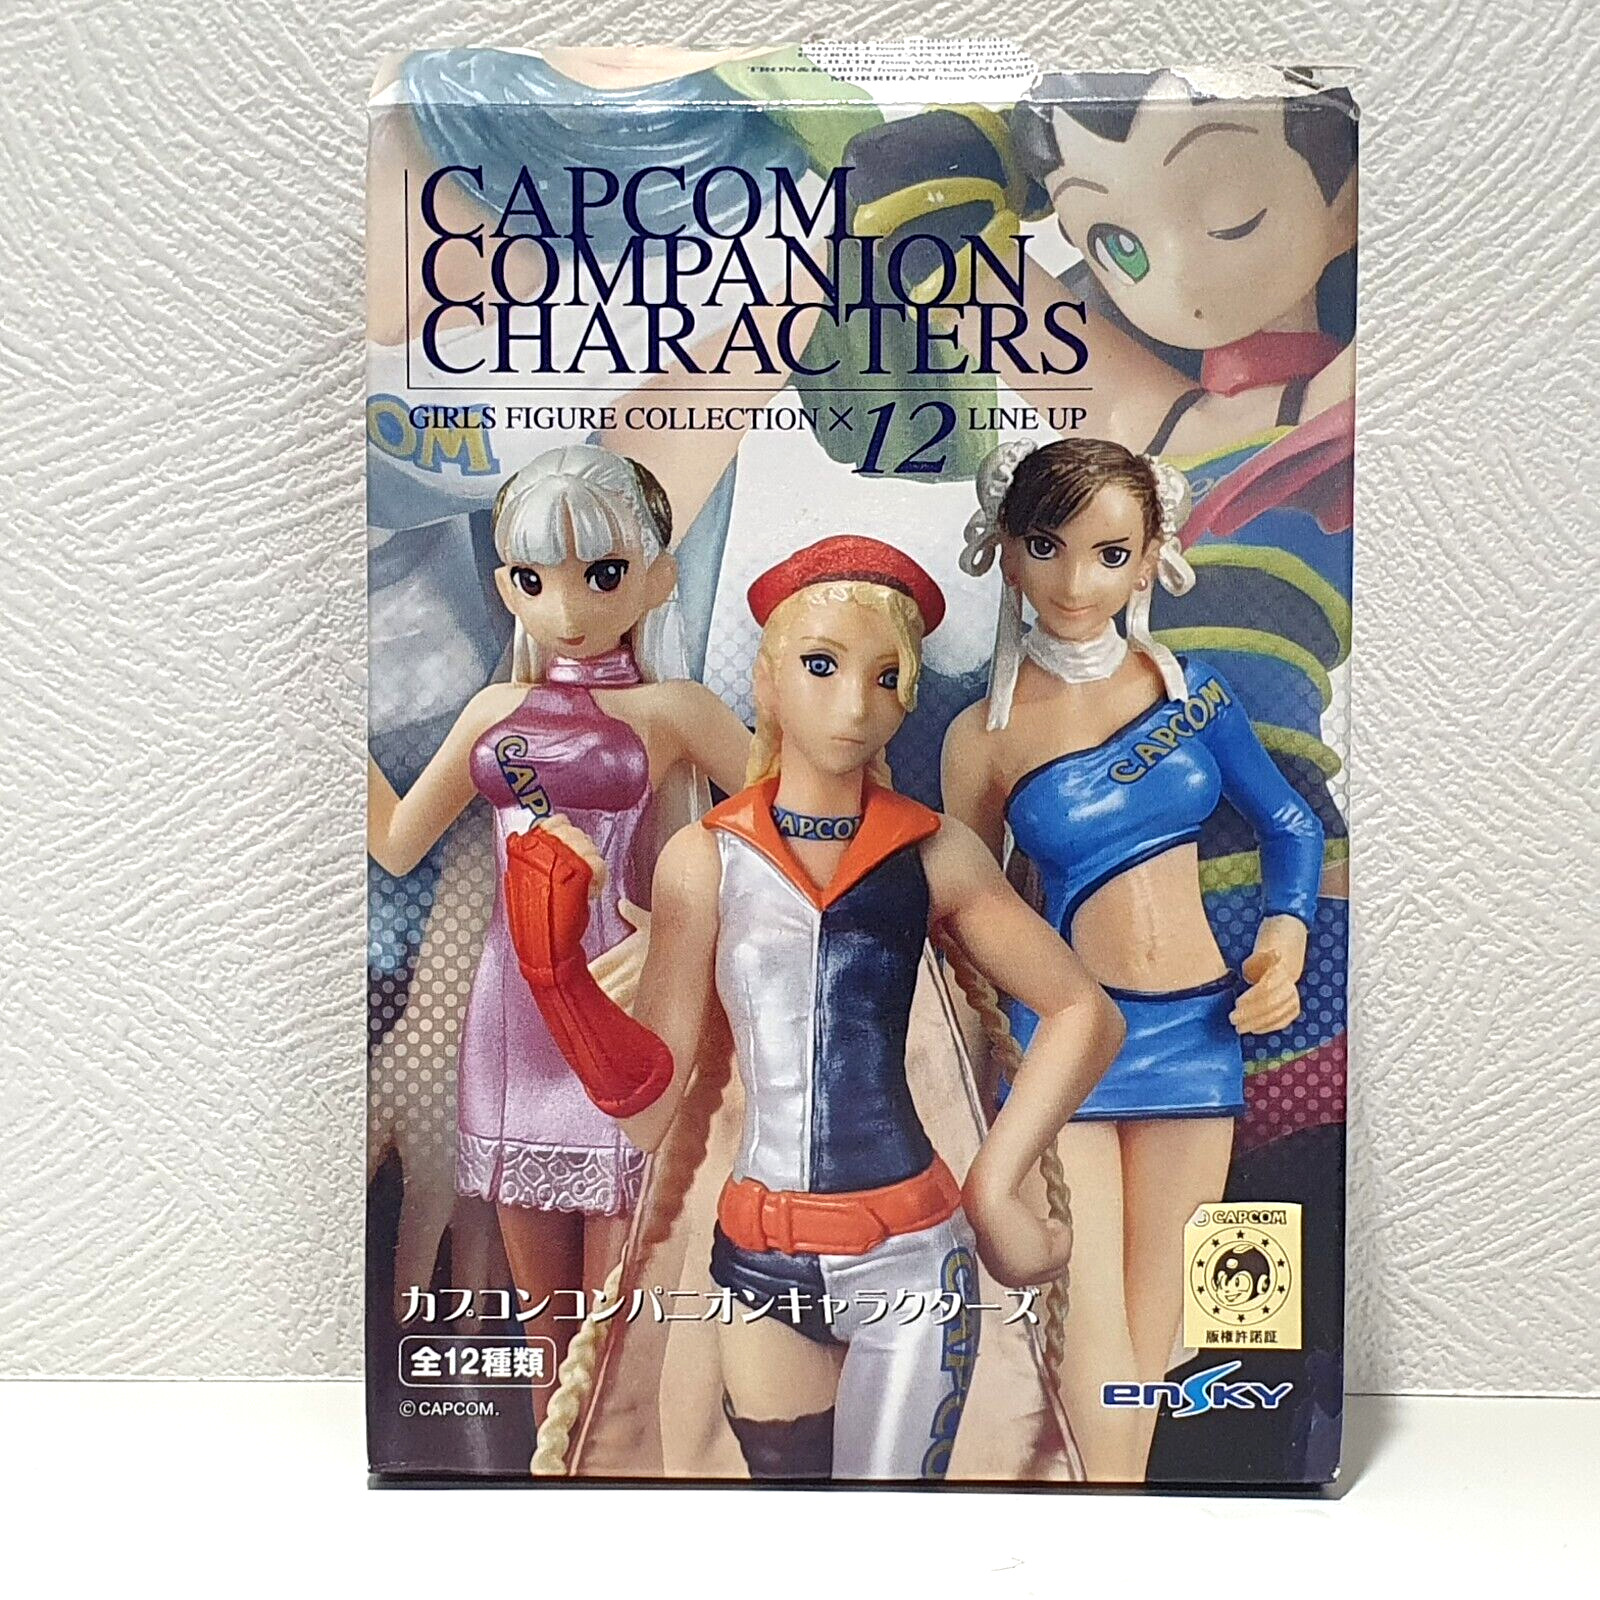 Capcom Companion Characters Street Fighter CHUN-LI figure NEW